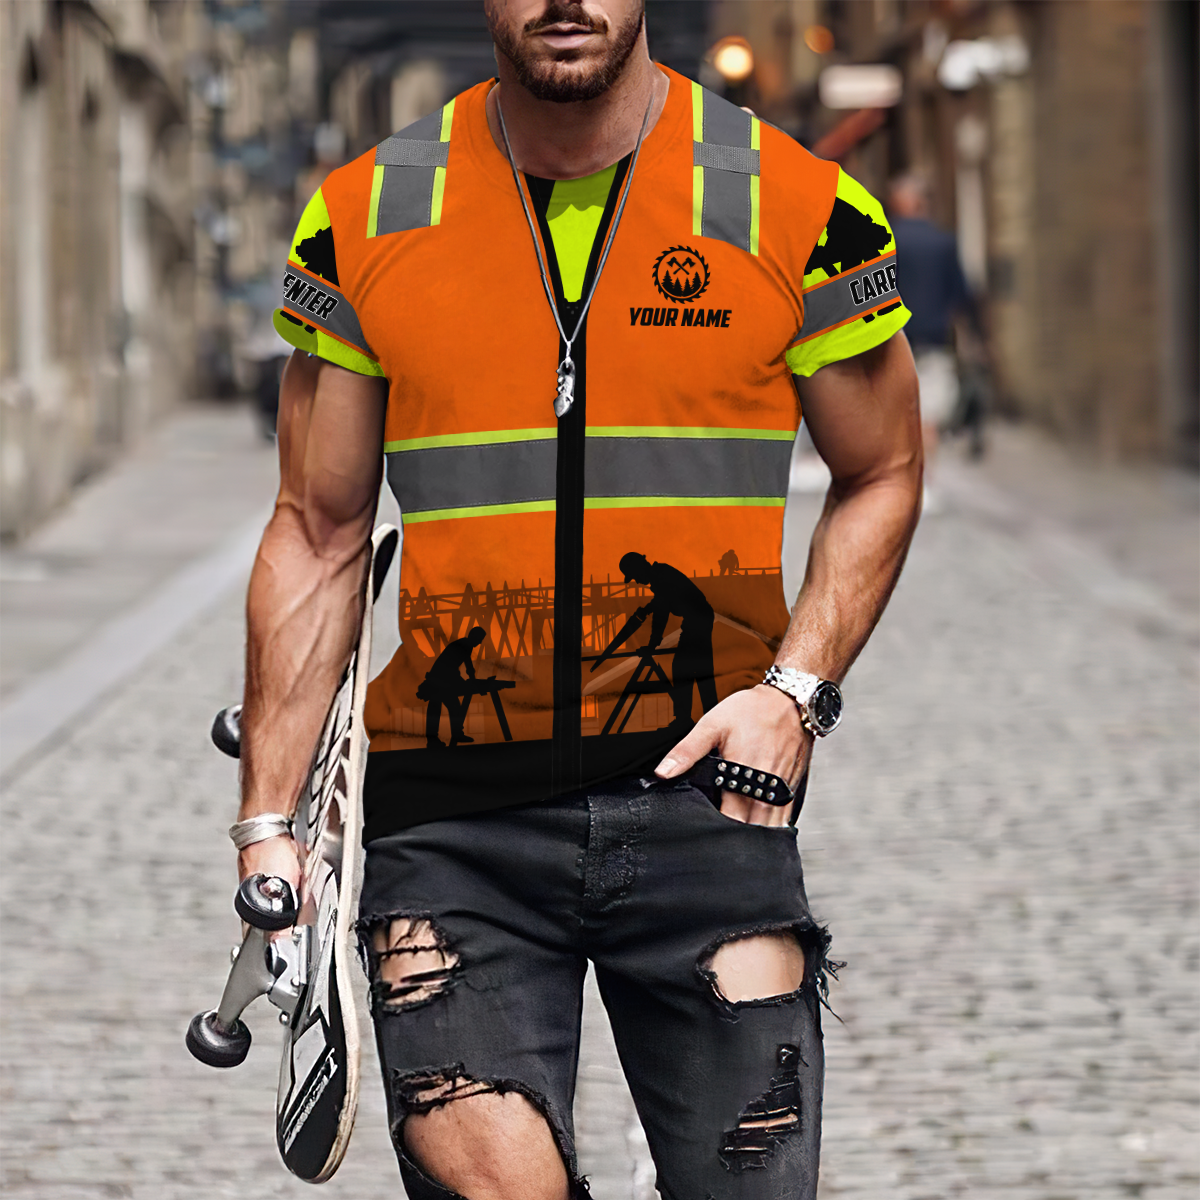 Personalized Carpenter Unisex Safety Shirt Men